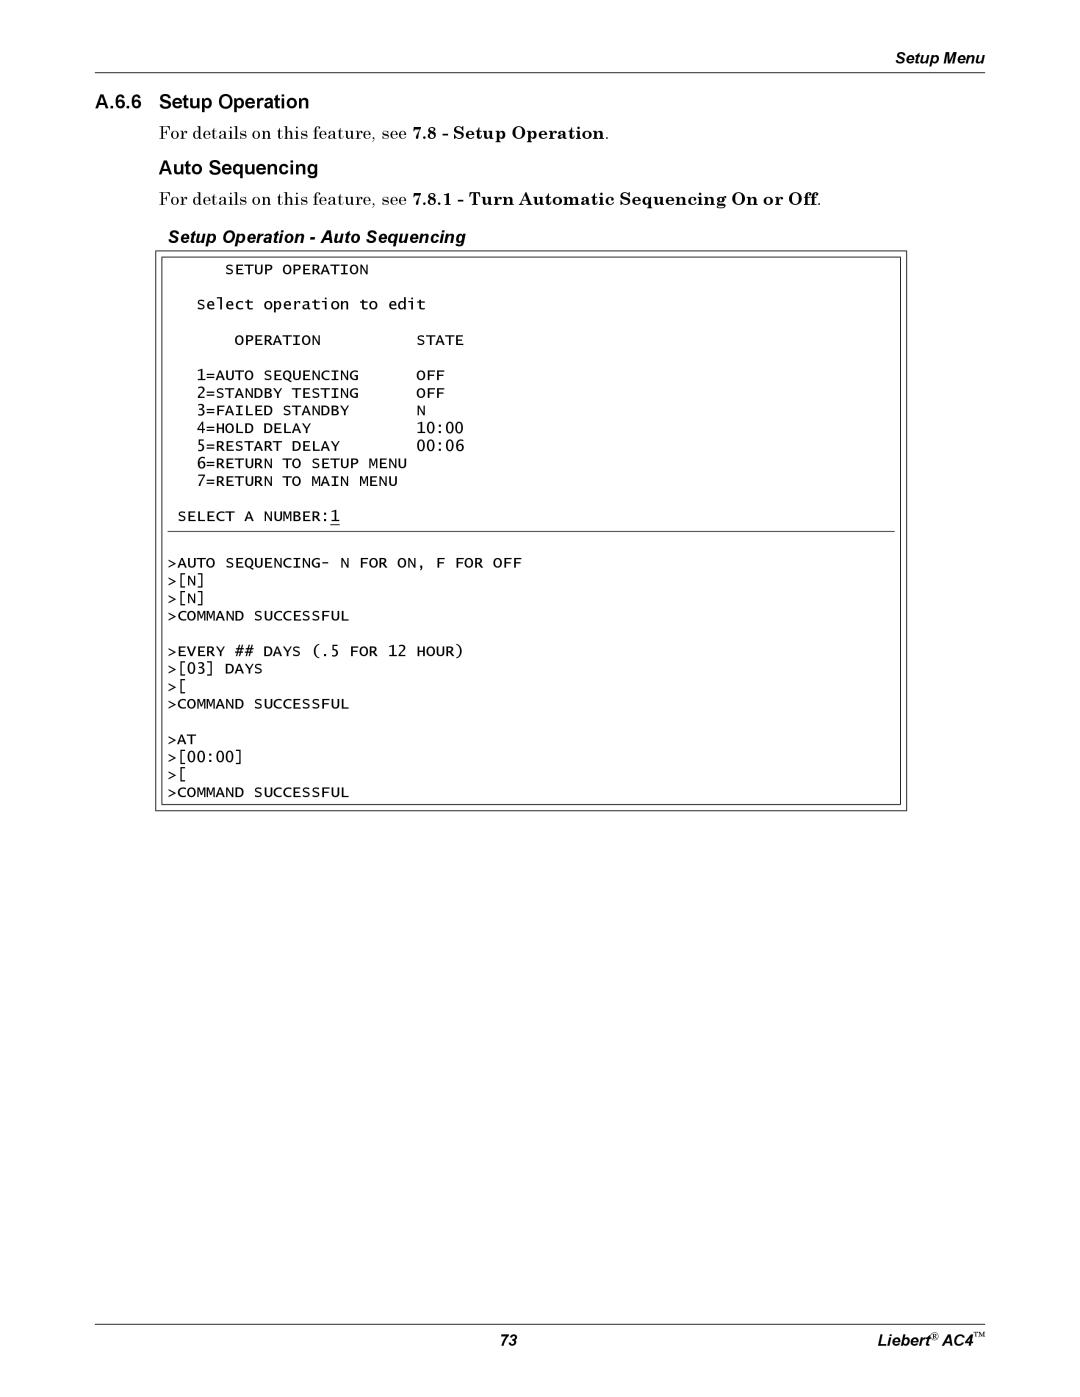 Emerson user manual A.6.6 Setup Operation, Setup Operation - Auto Sequencing, Setup Menu, Liebert AC4 